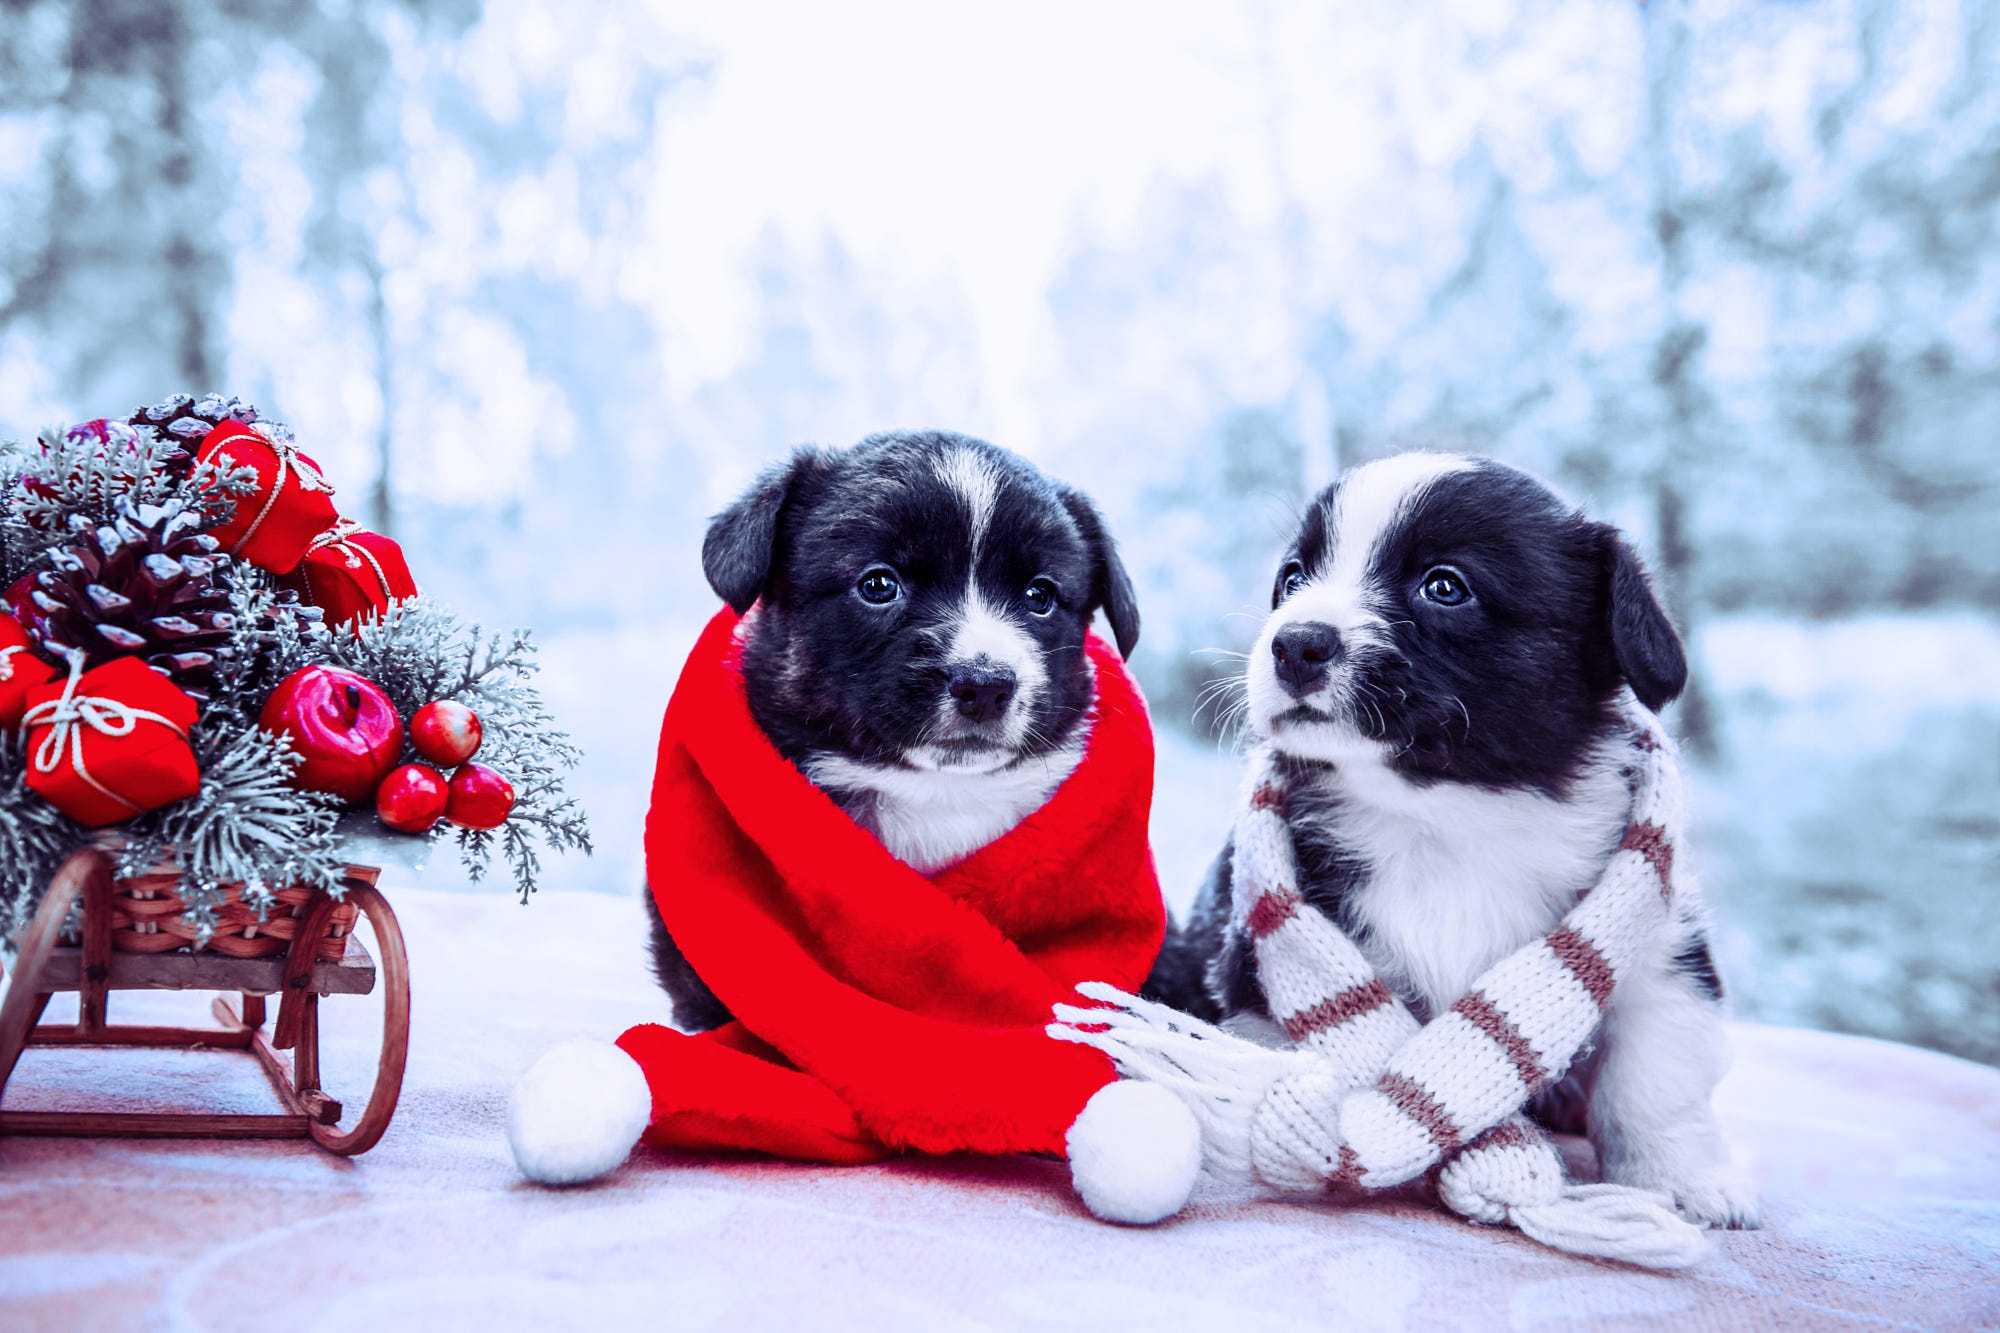 Wallpaper Christmas New Year dog cute animals 5k Holidays 17096